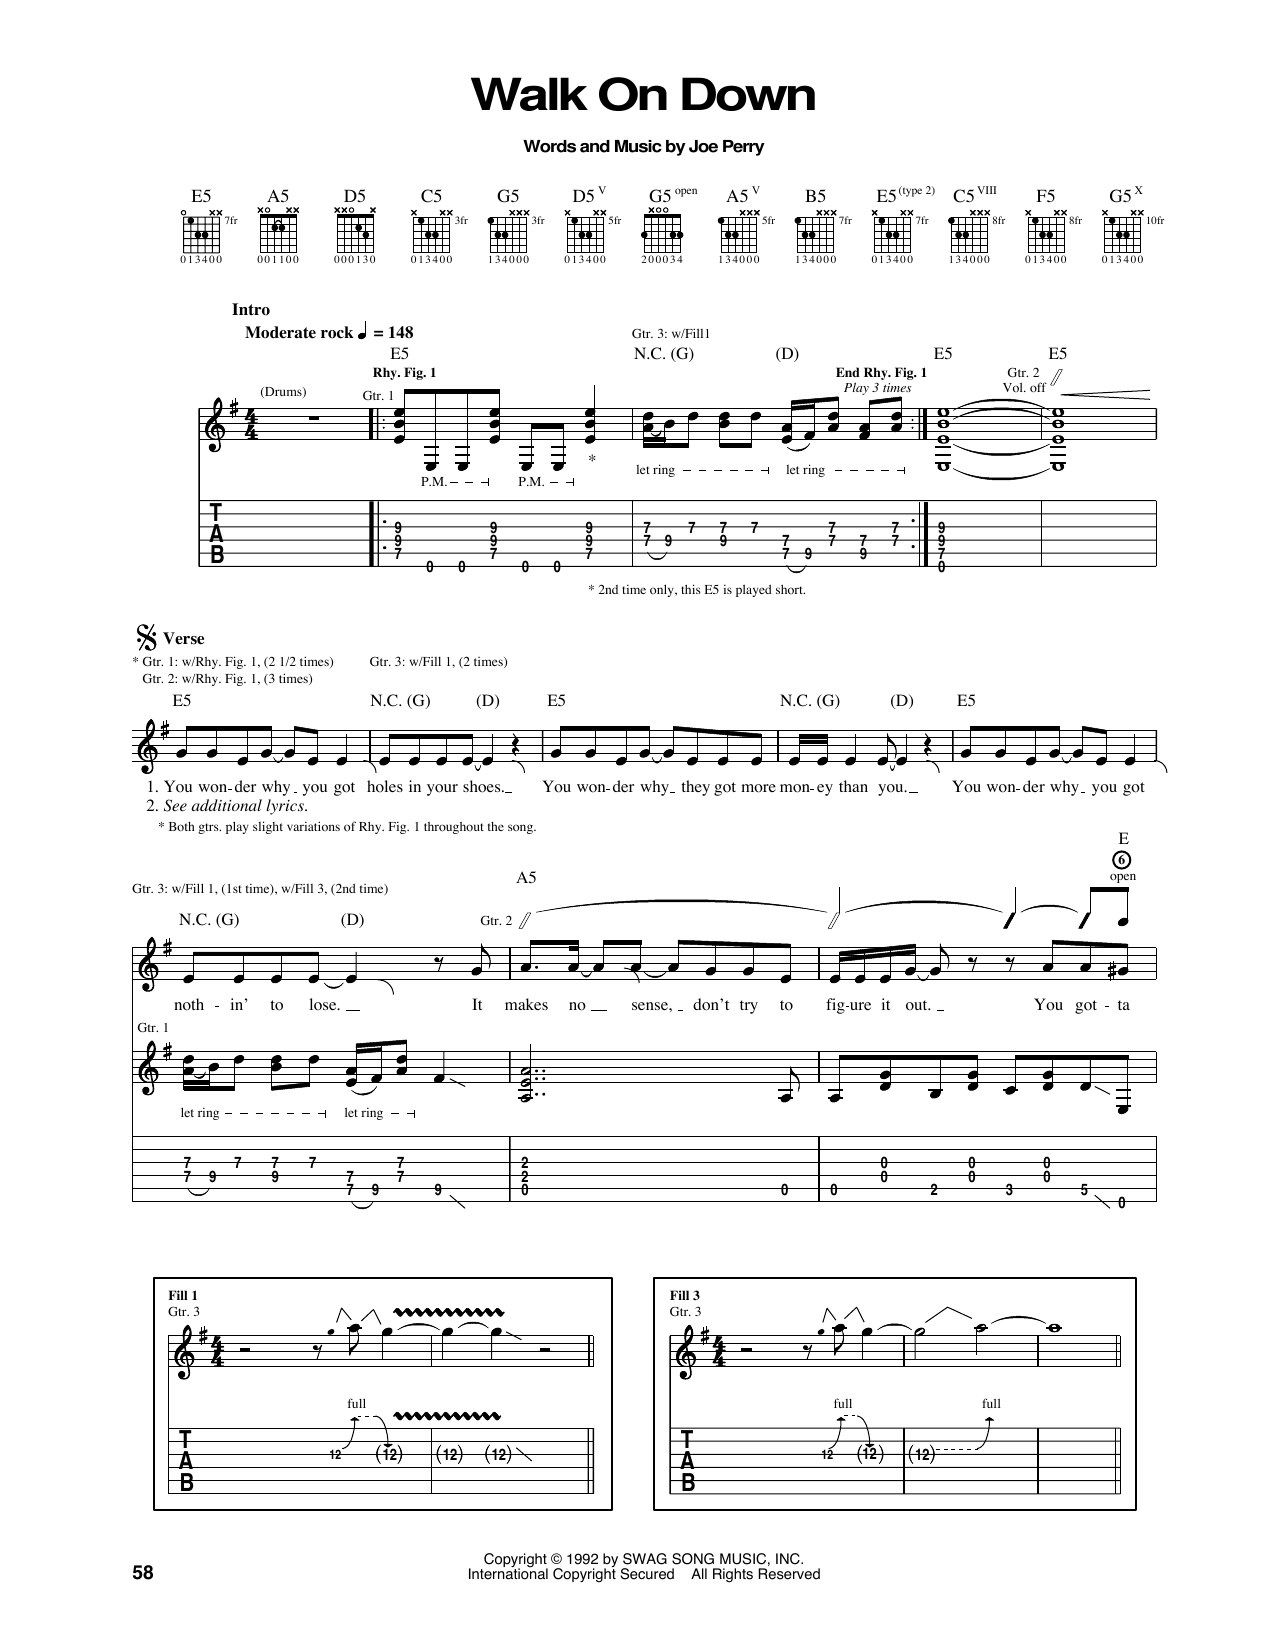 Aerosmith Walk On Down Sheet Music Notes & Chords for Guitar Tab - Download or Print PDF